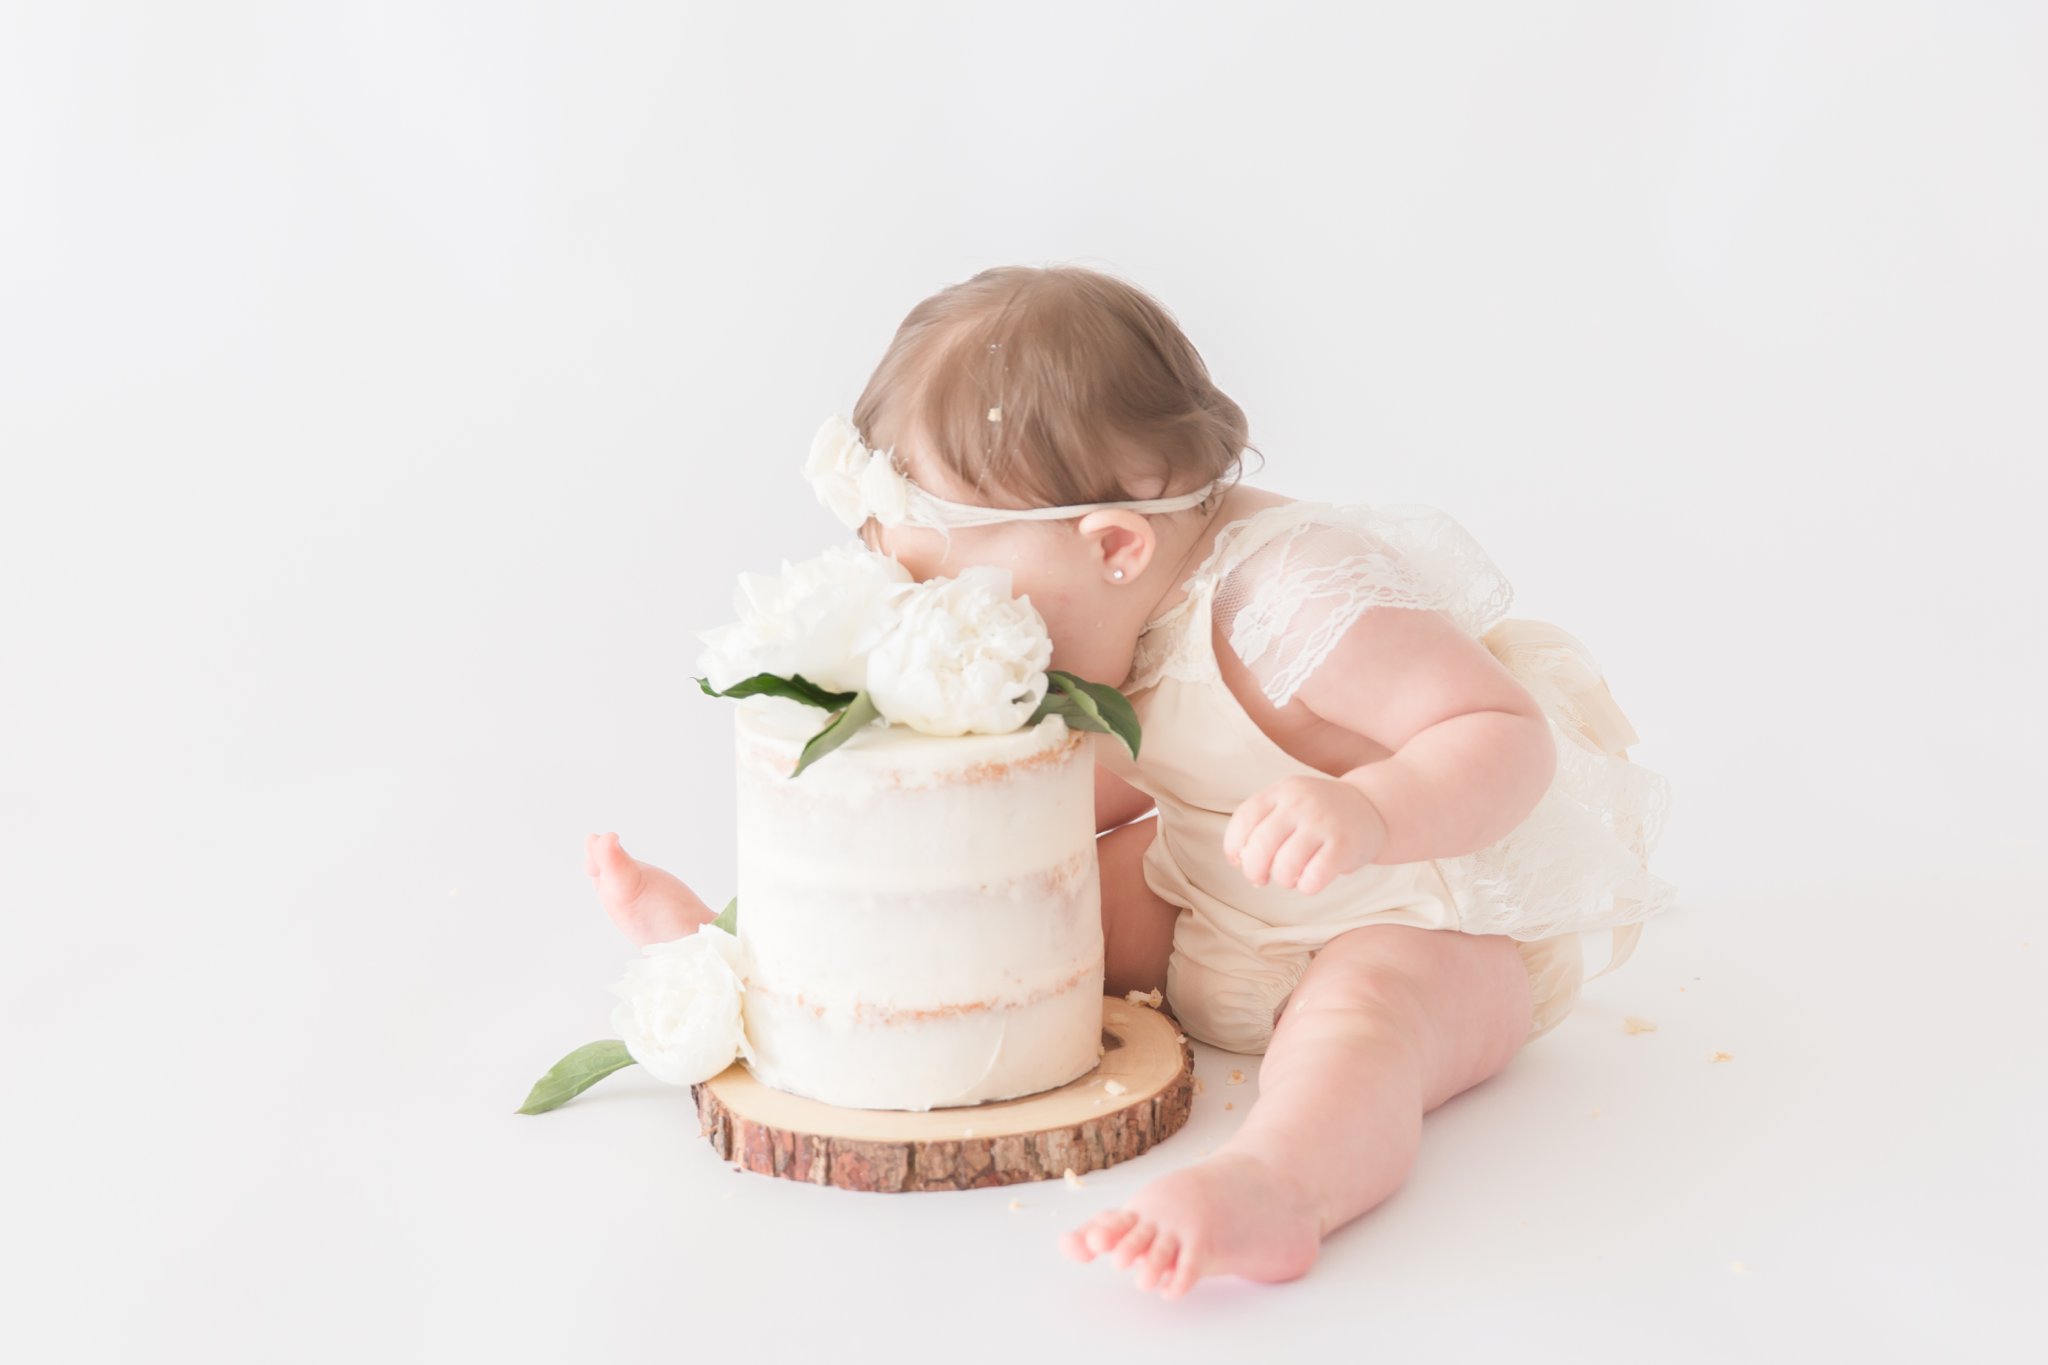 Baby cake smash session in jupiter florida photography studio 